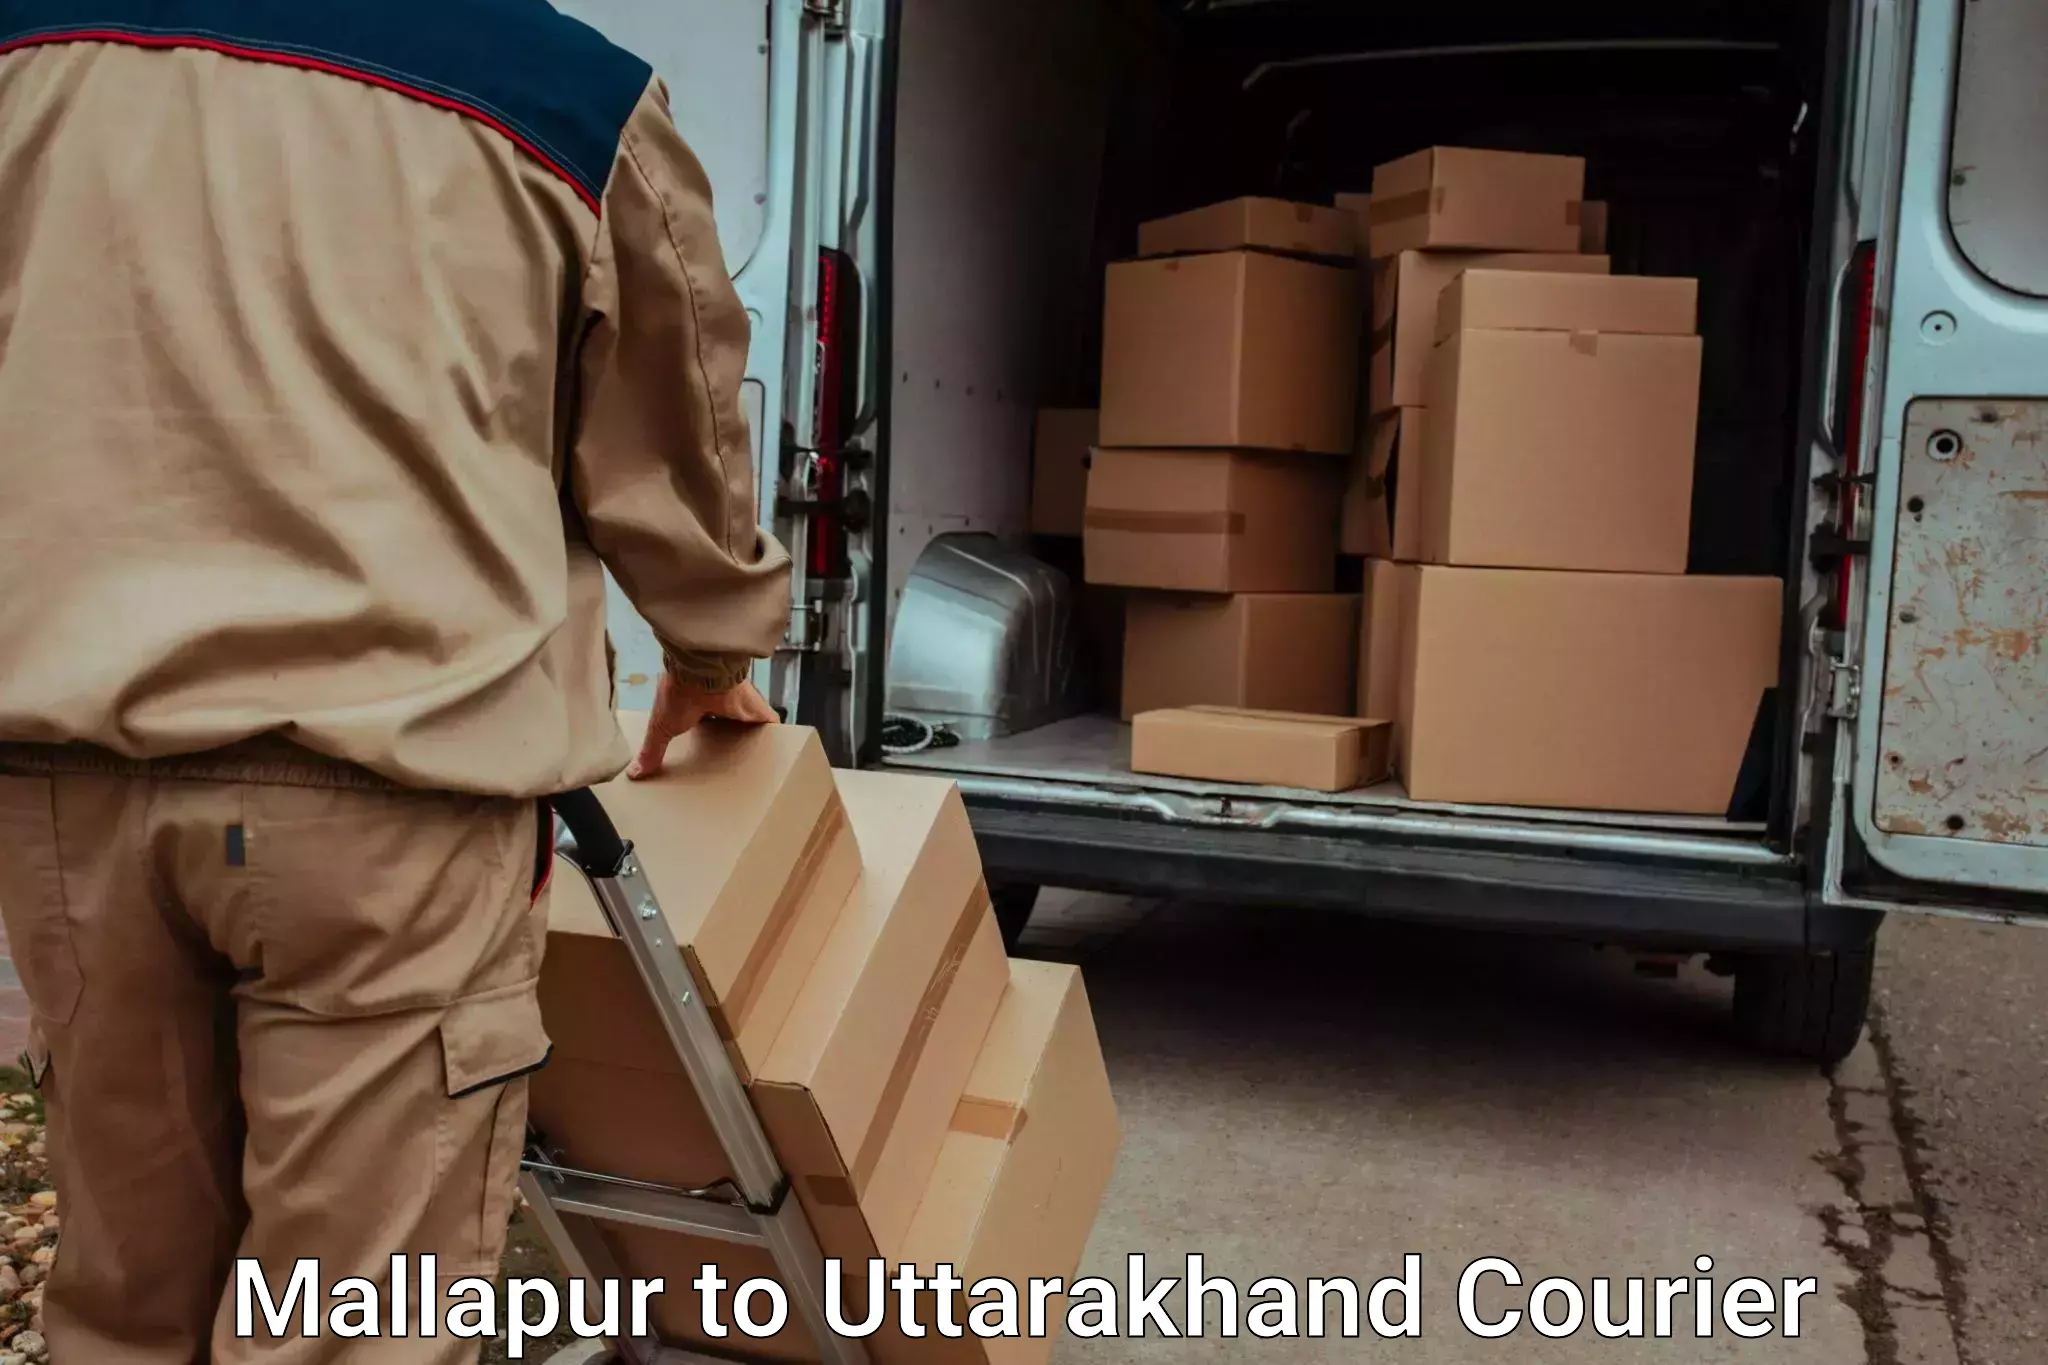 Luggage shipment specialists Mallapur to Uttarakhand